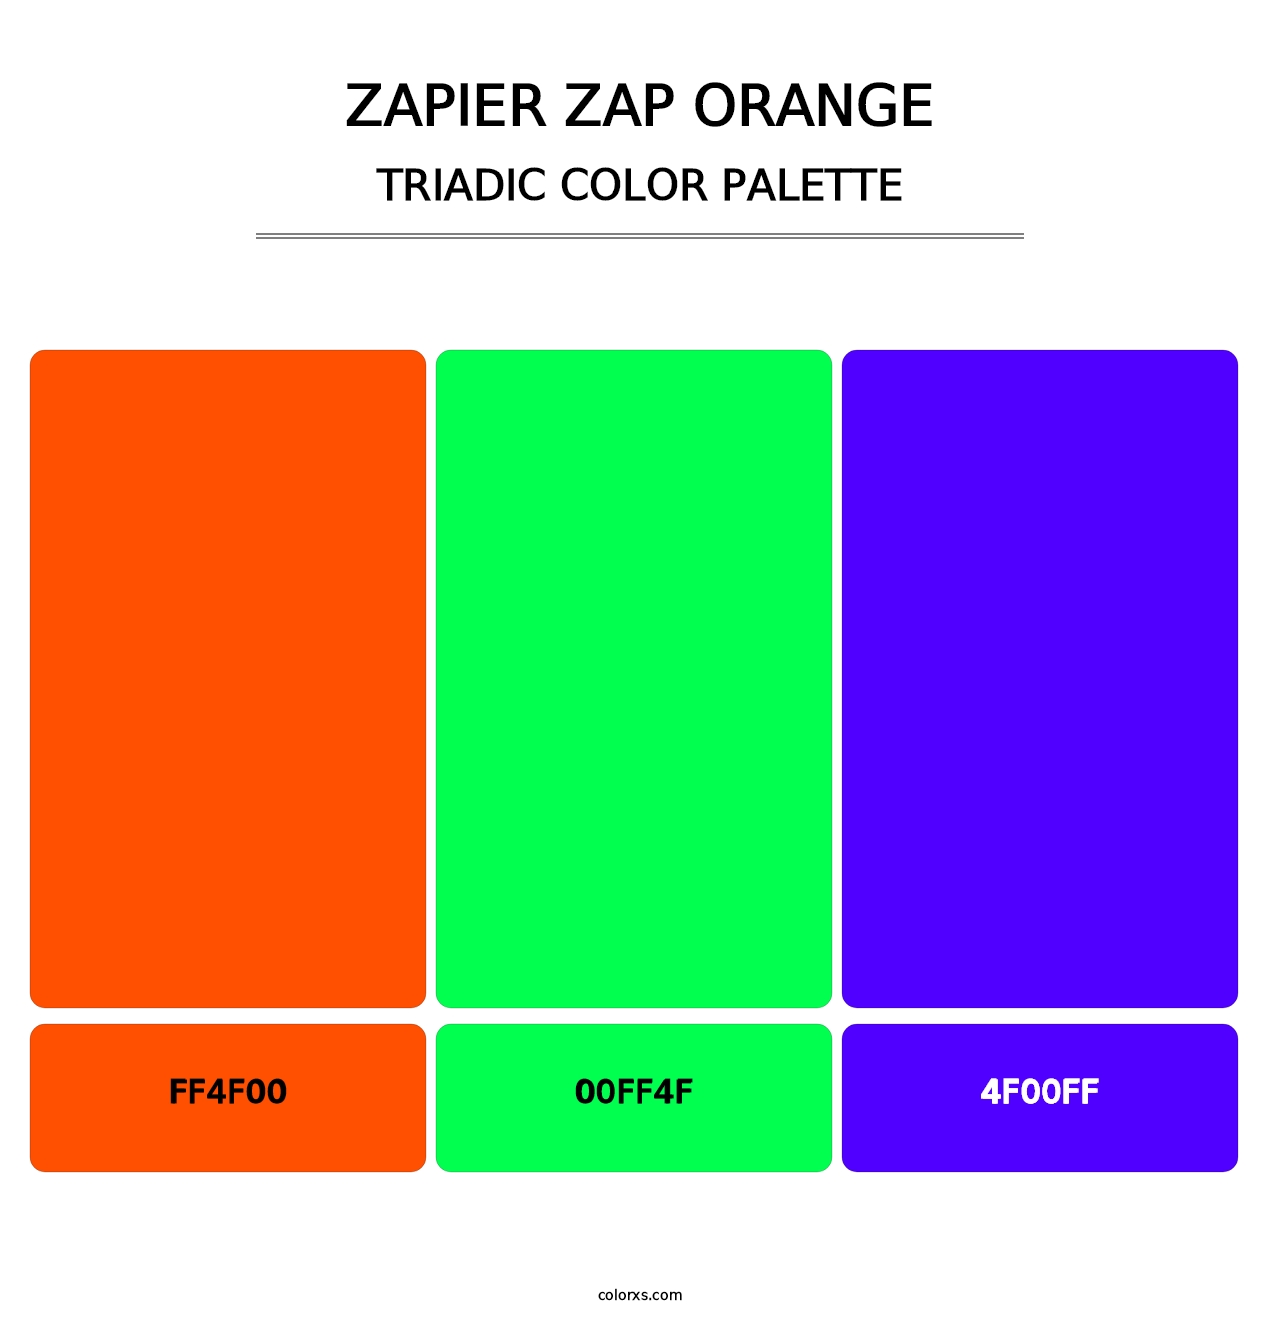 Zapier Zap Orange - Triadic Color Palette